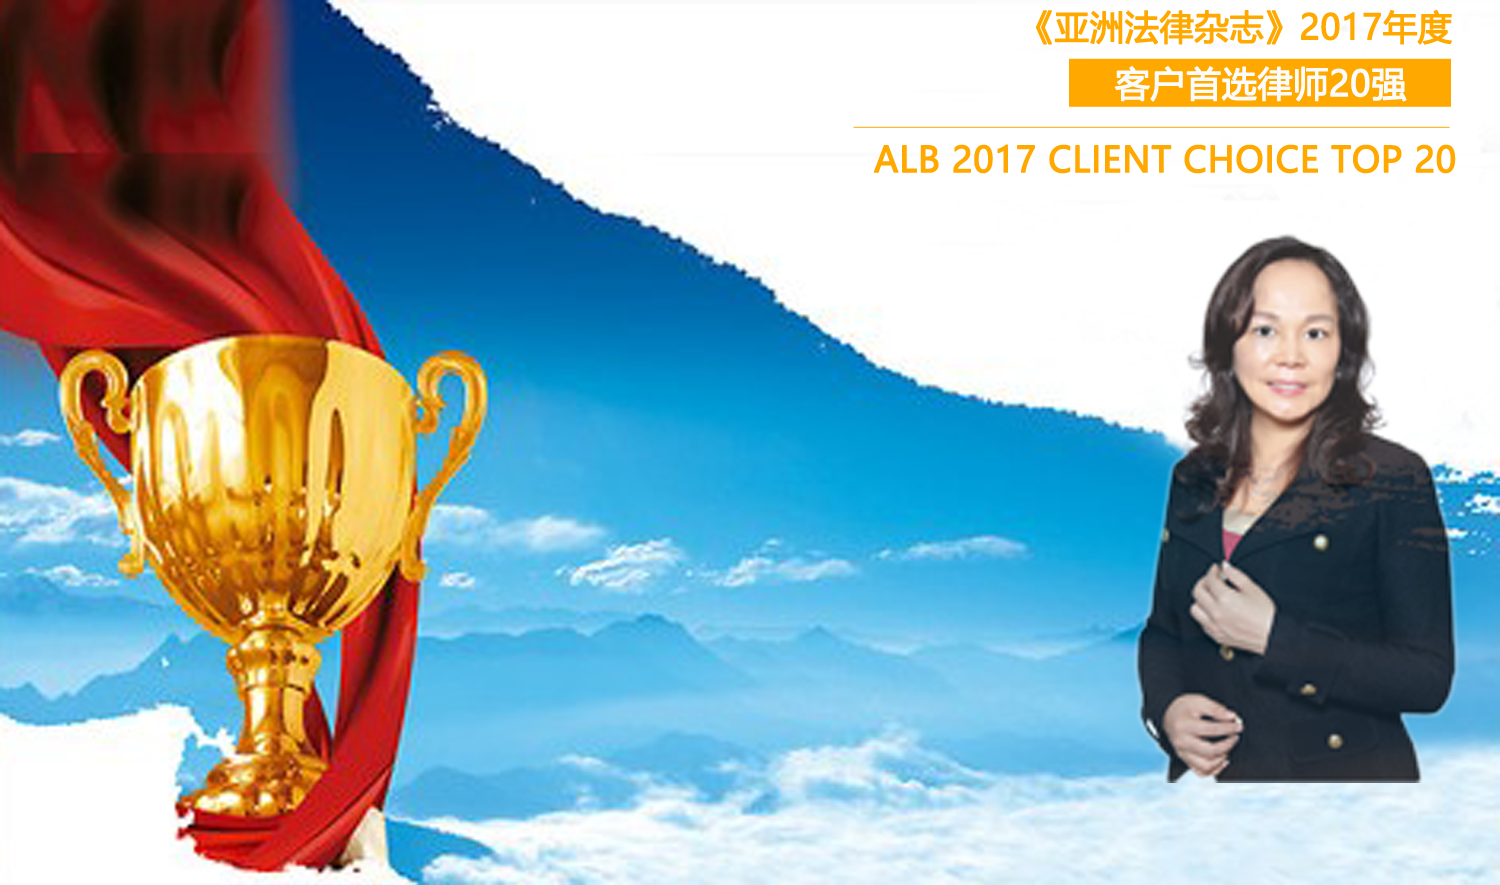 WGH ALB 2017 Client Choice Top 20.png